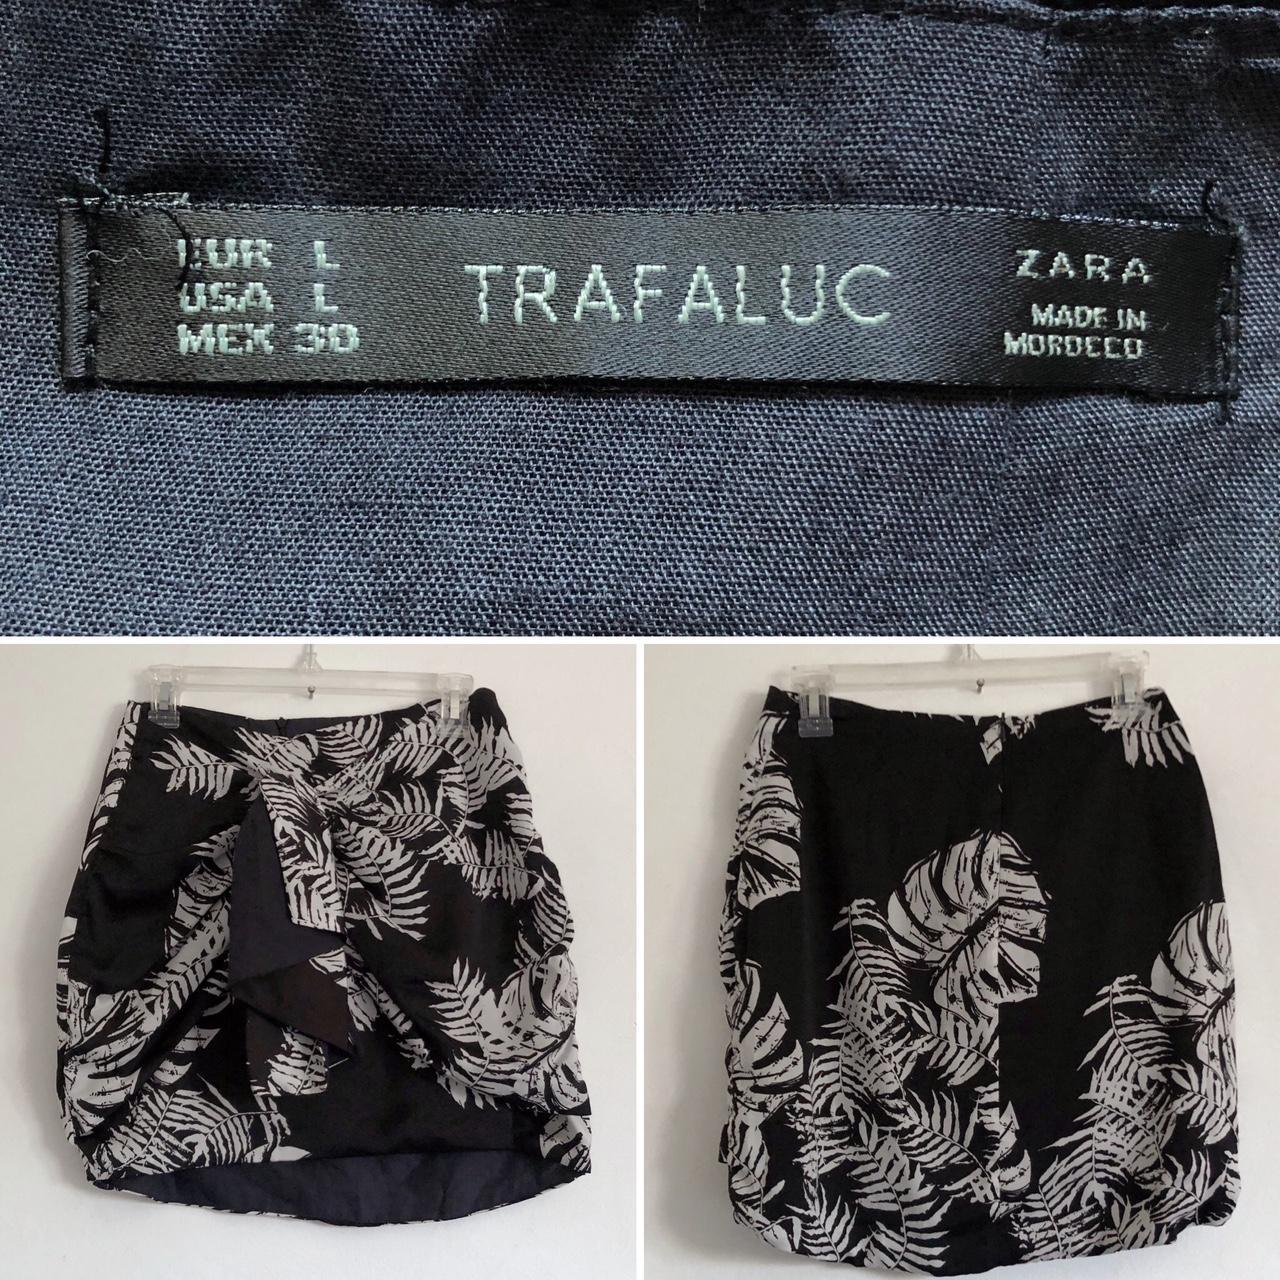 Zara Women's Black and White Skirt (3)